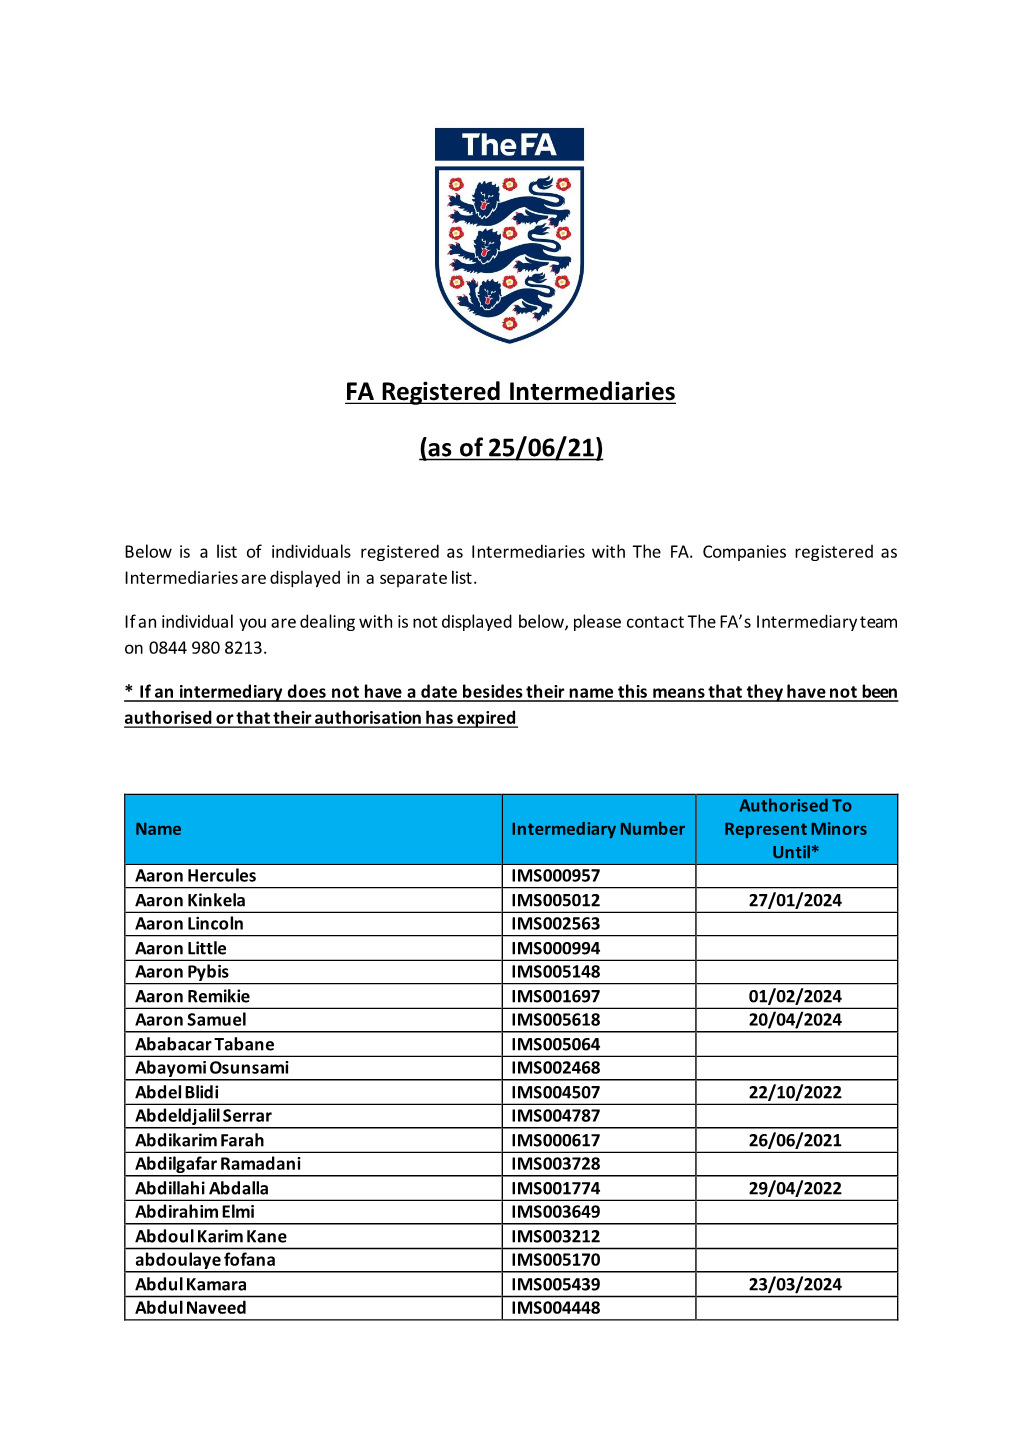 FA Registered Intermediaries (As of 25/06/21)